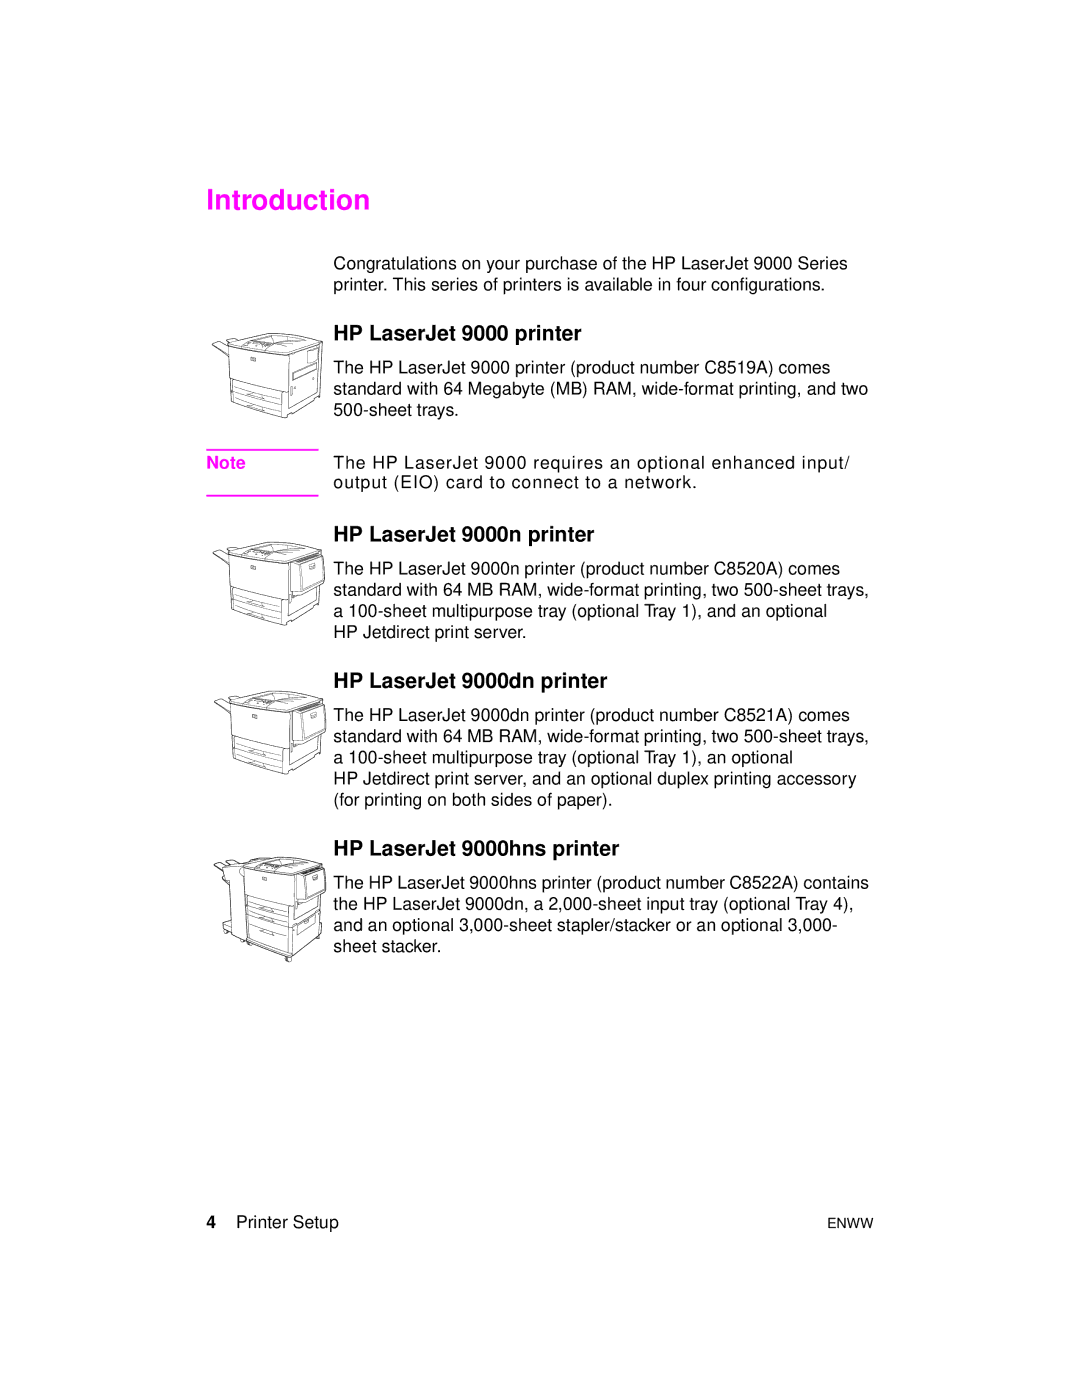 HP 9000hns manual Introduction, HP LaserJet 9000 printer, HP LaserJet 9000n printer, HP LaserJet 9000dn printer 